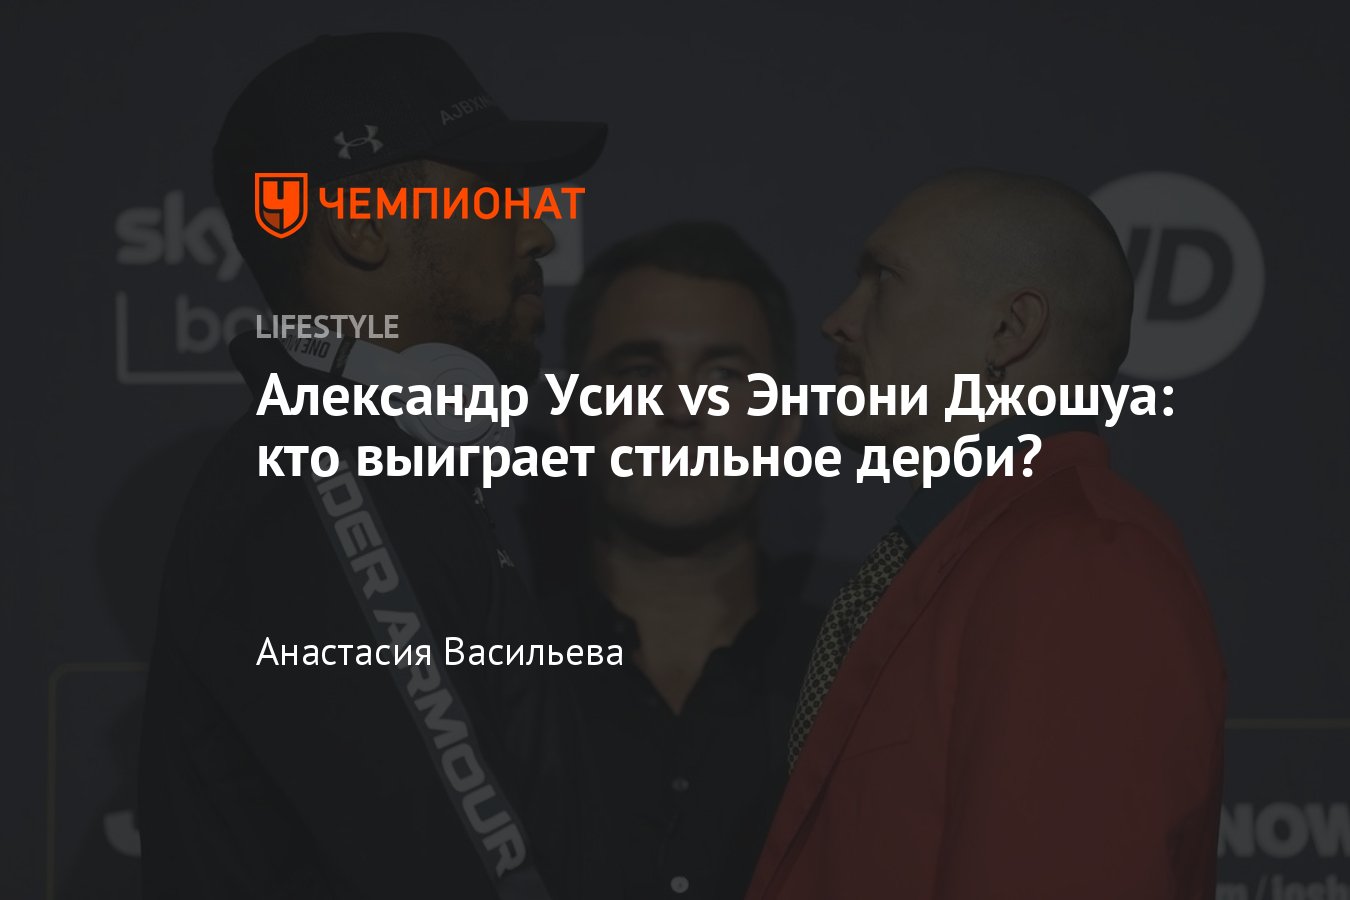 Alexander Usyk vs Anthony Joshua: who will win the stylish derby? thumbnail